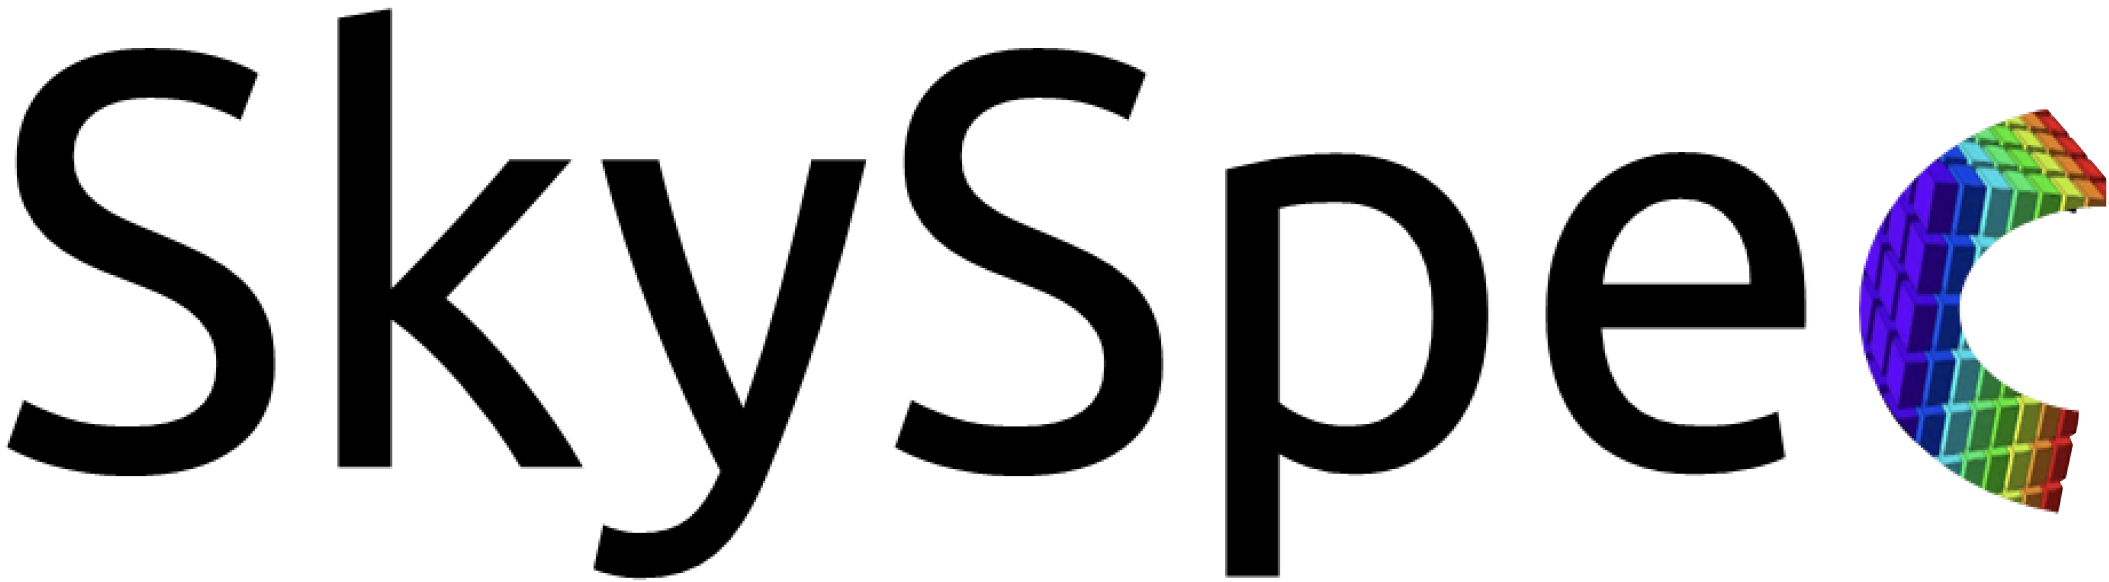 SkySpec-logo.png